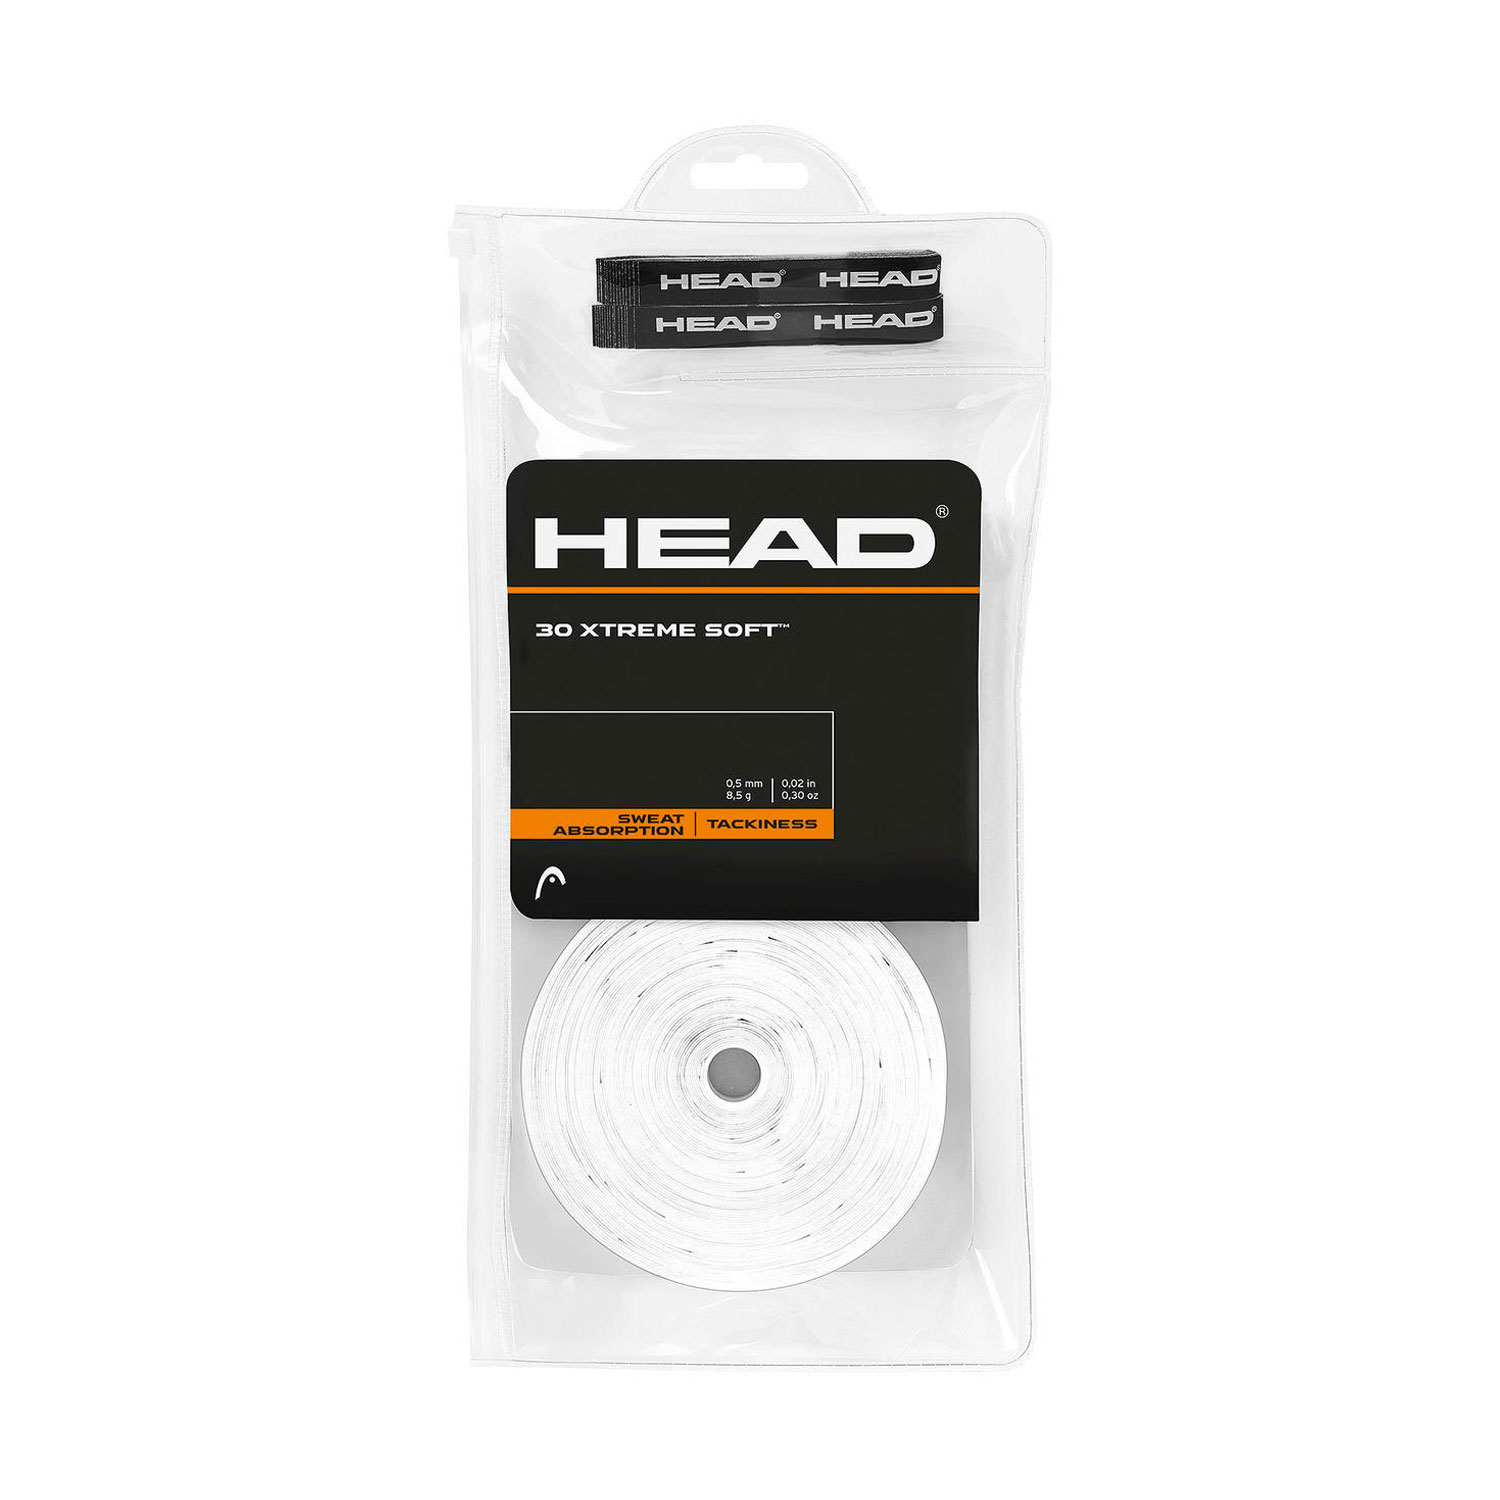 Head Xtreme Soft x 30 Overgrip - White